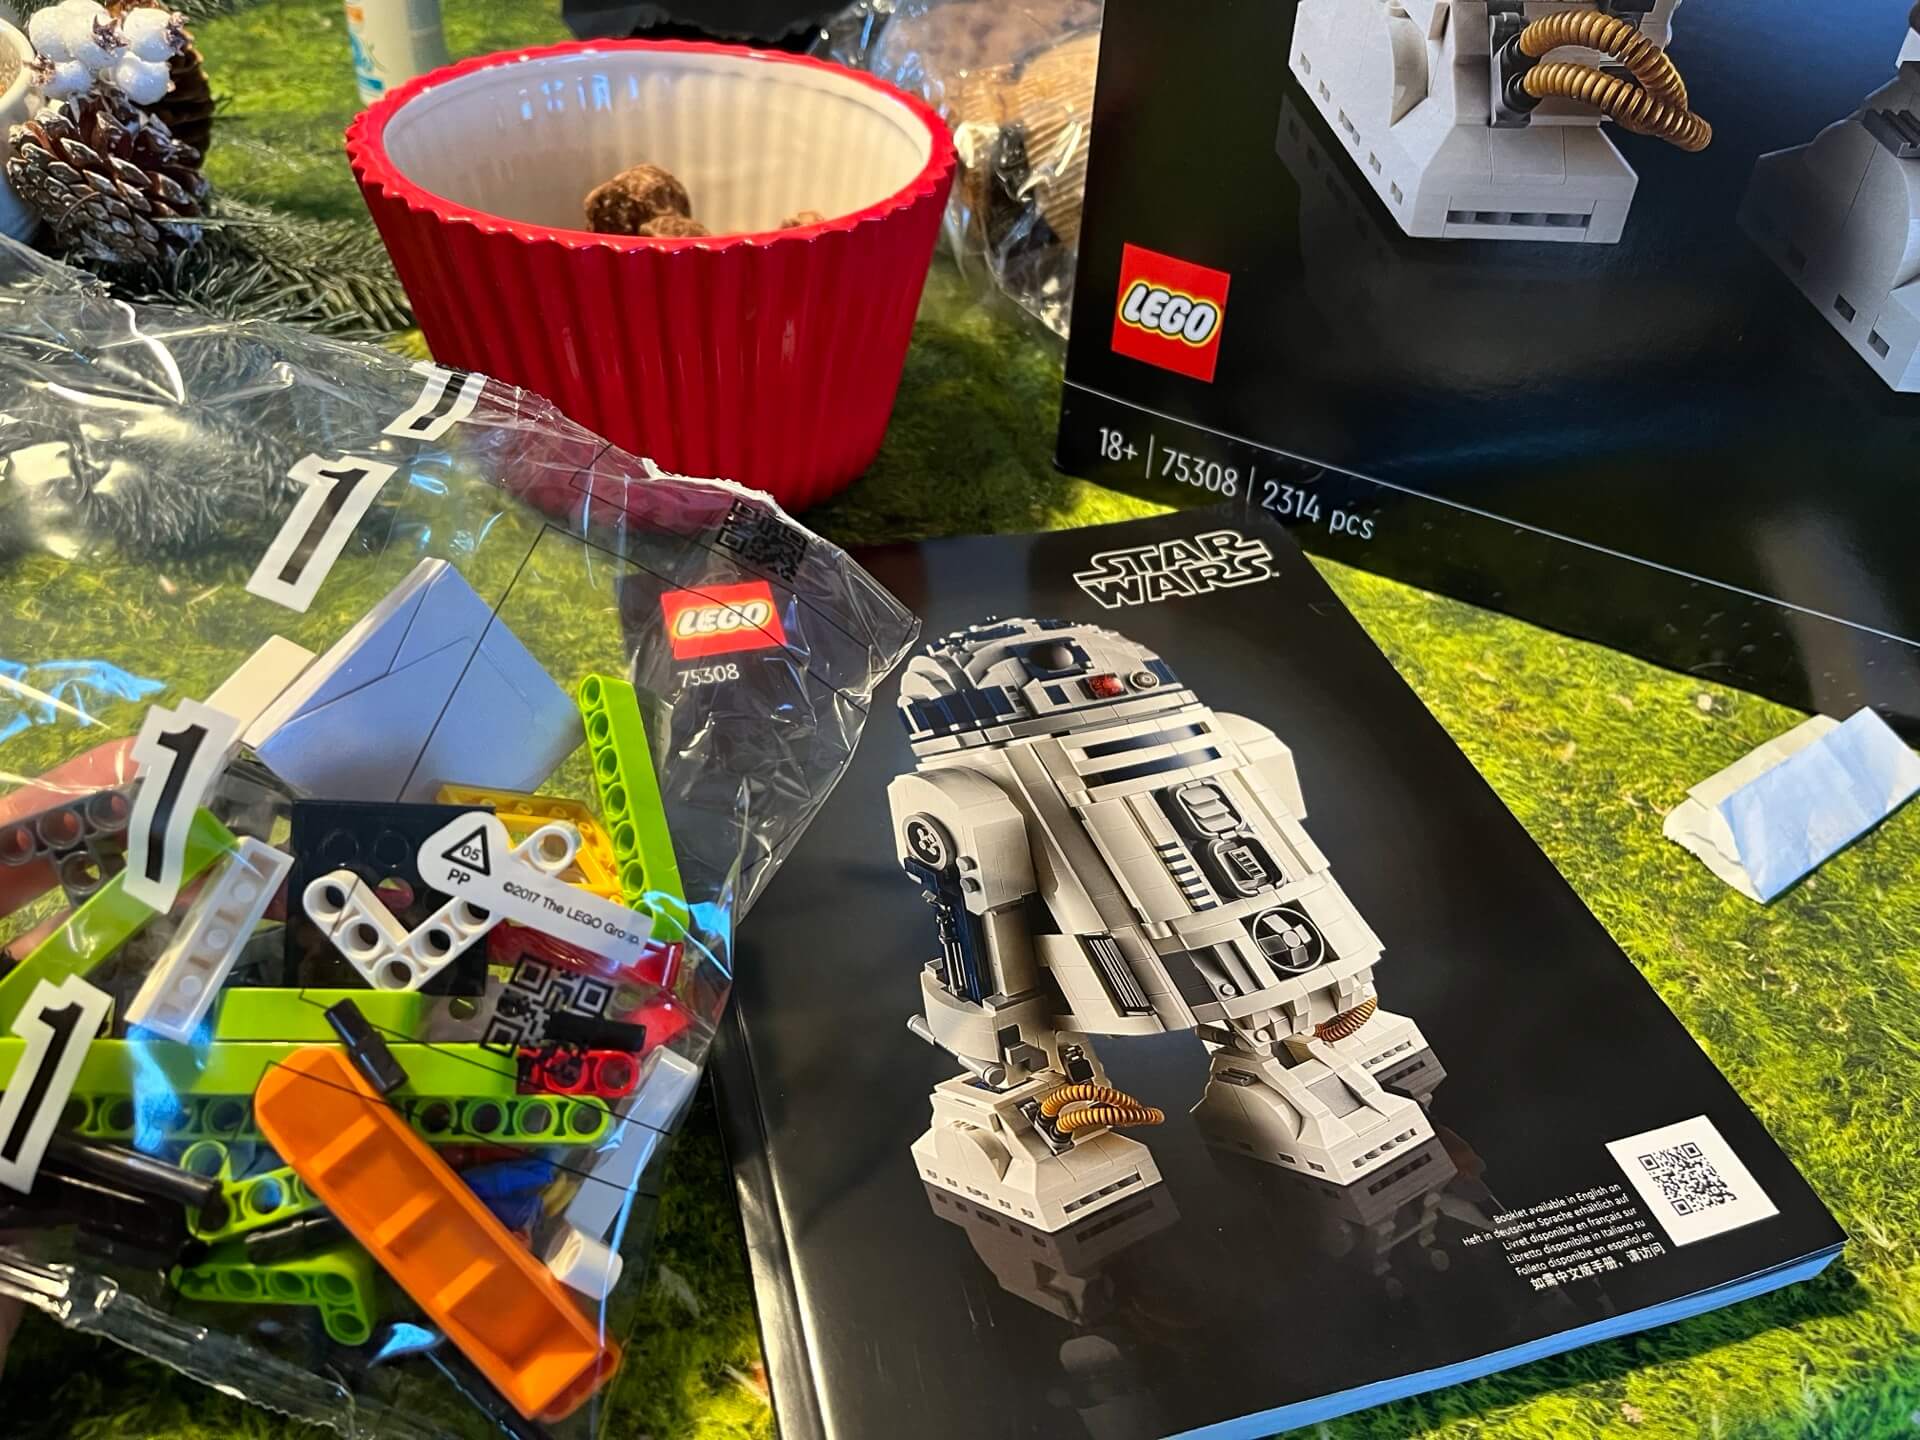 Building R2D2 Star Wars Lego robot which I got last Christmas start